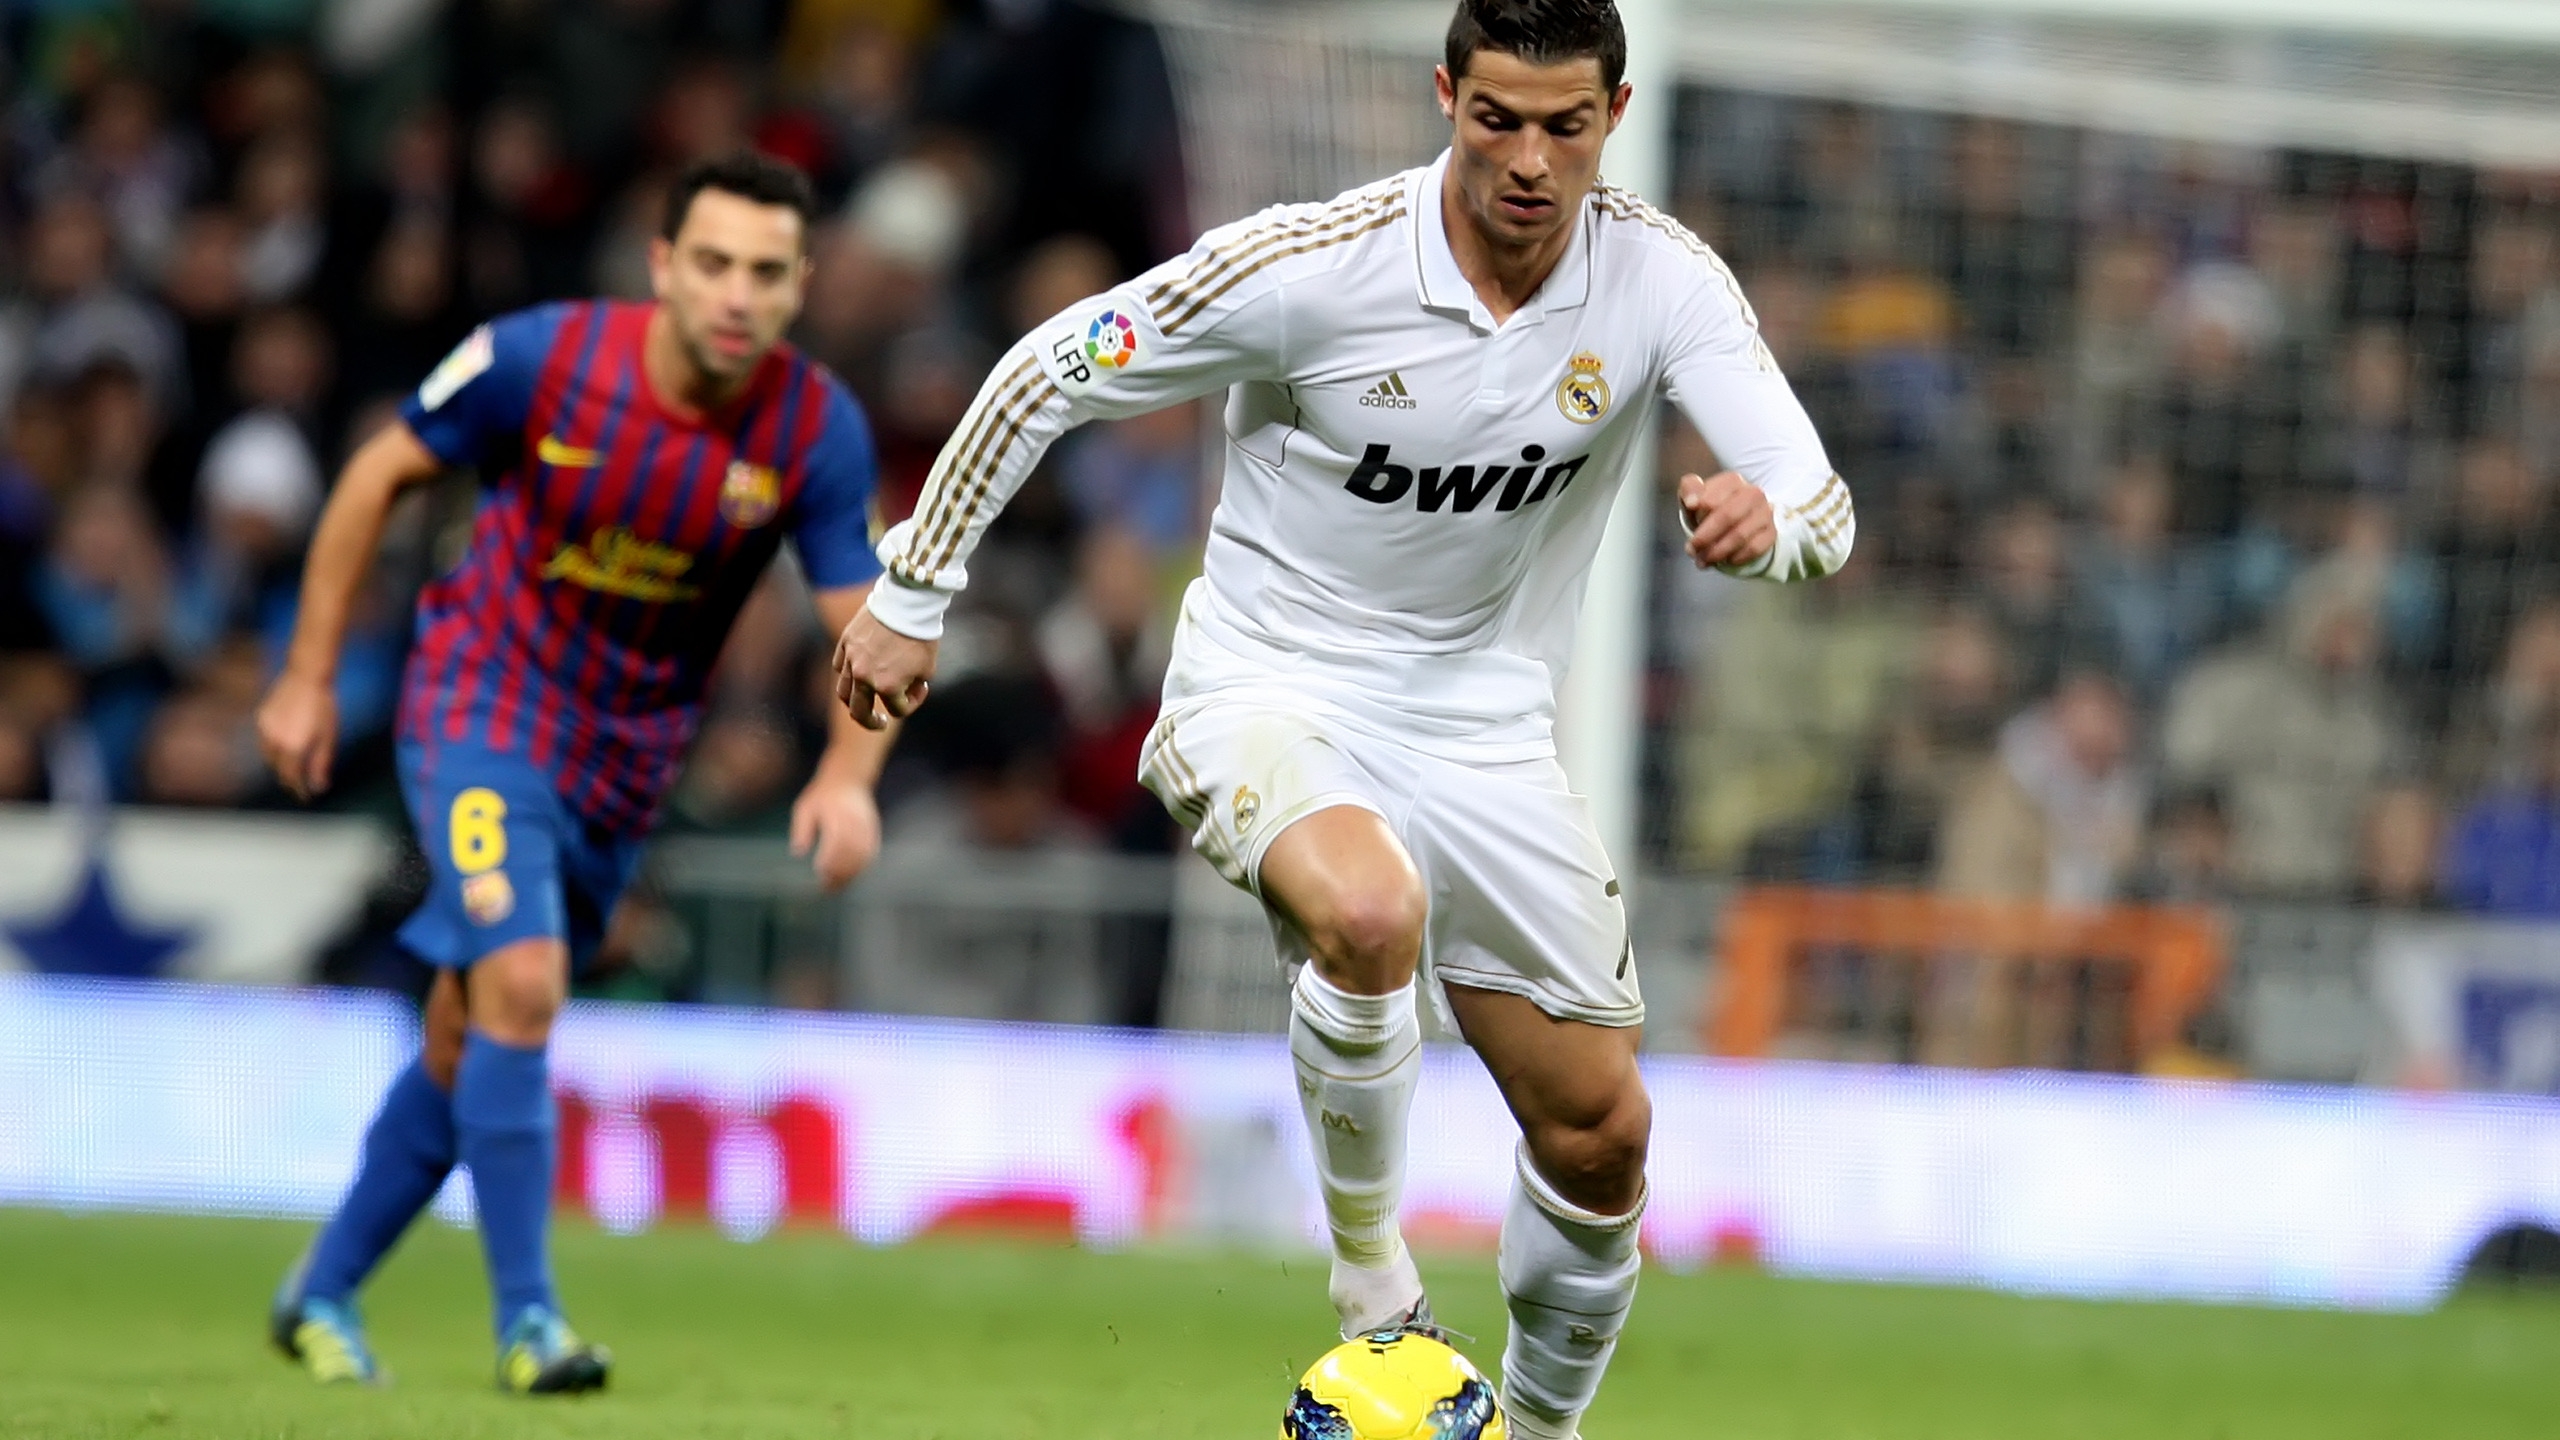 Cristiano Ronaldo Performing for 2560x1440 HDTV resolution